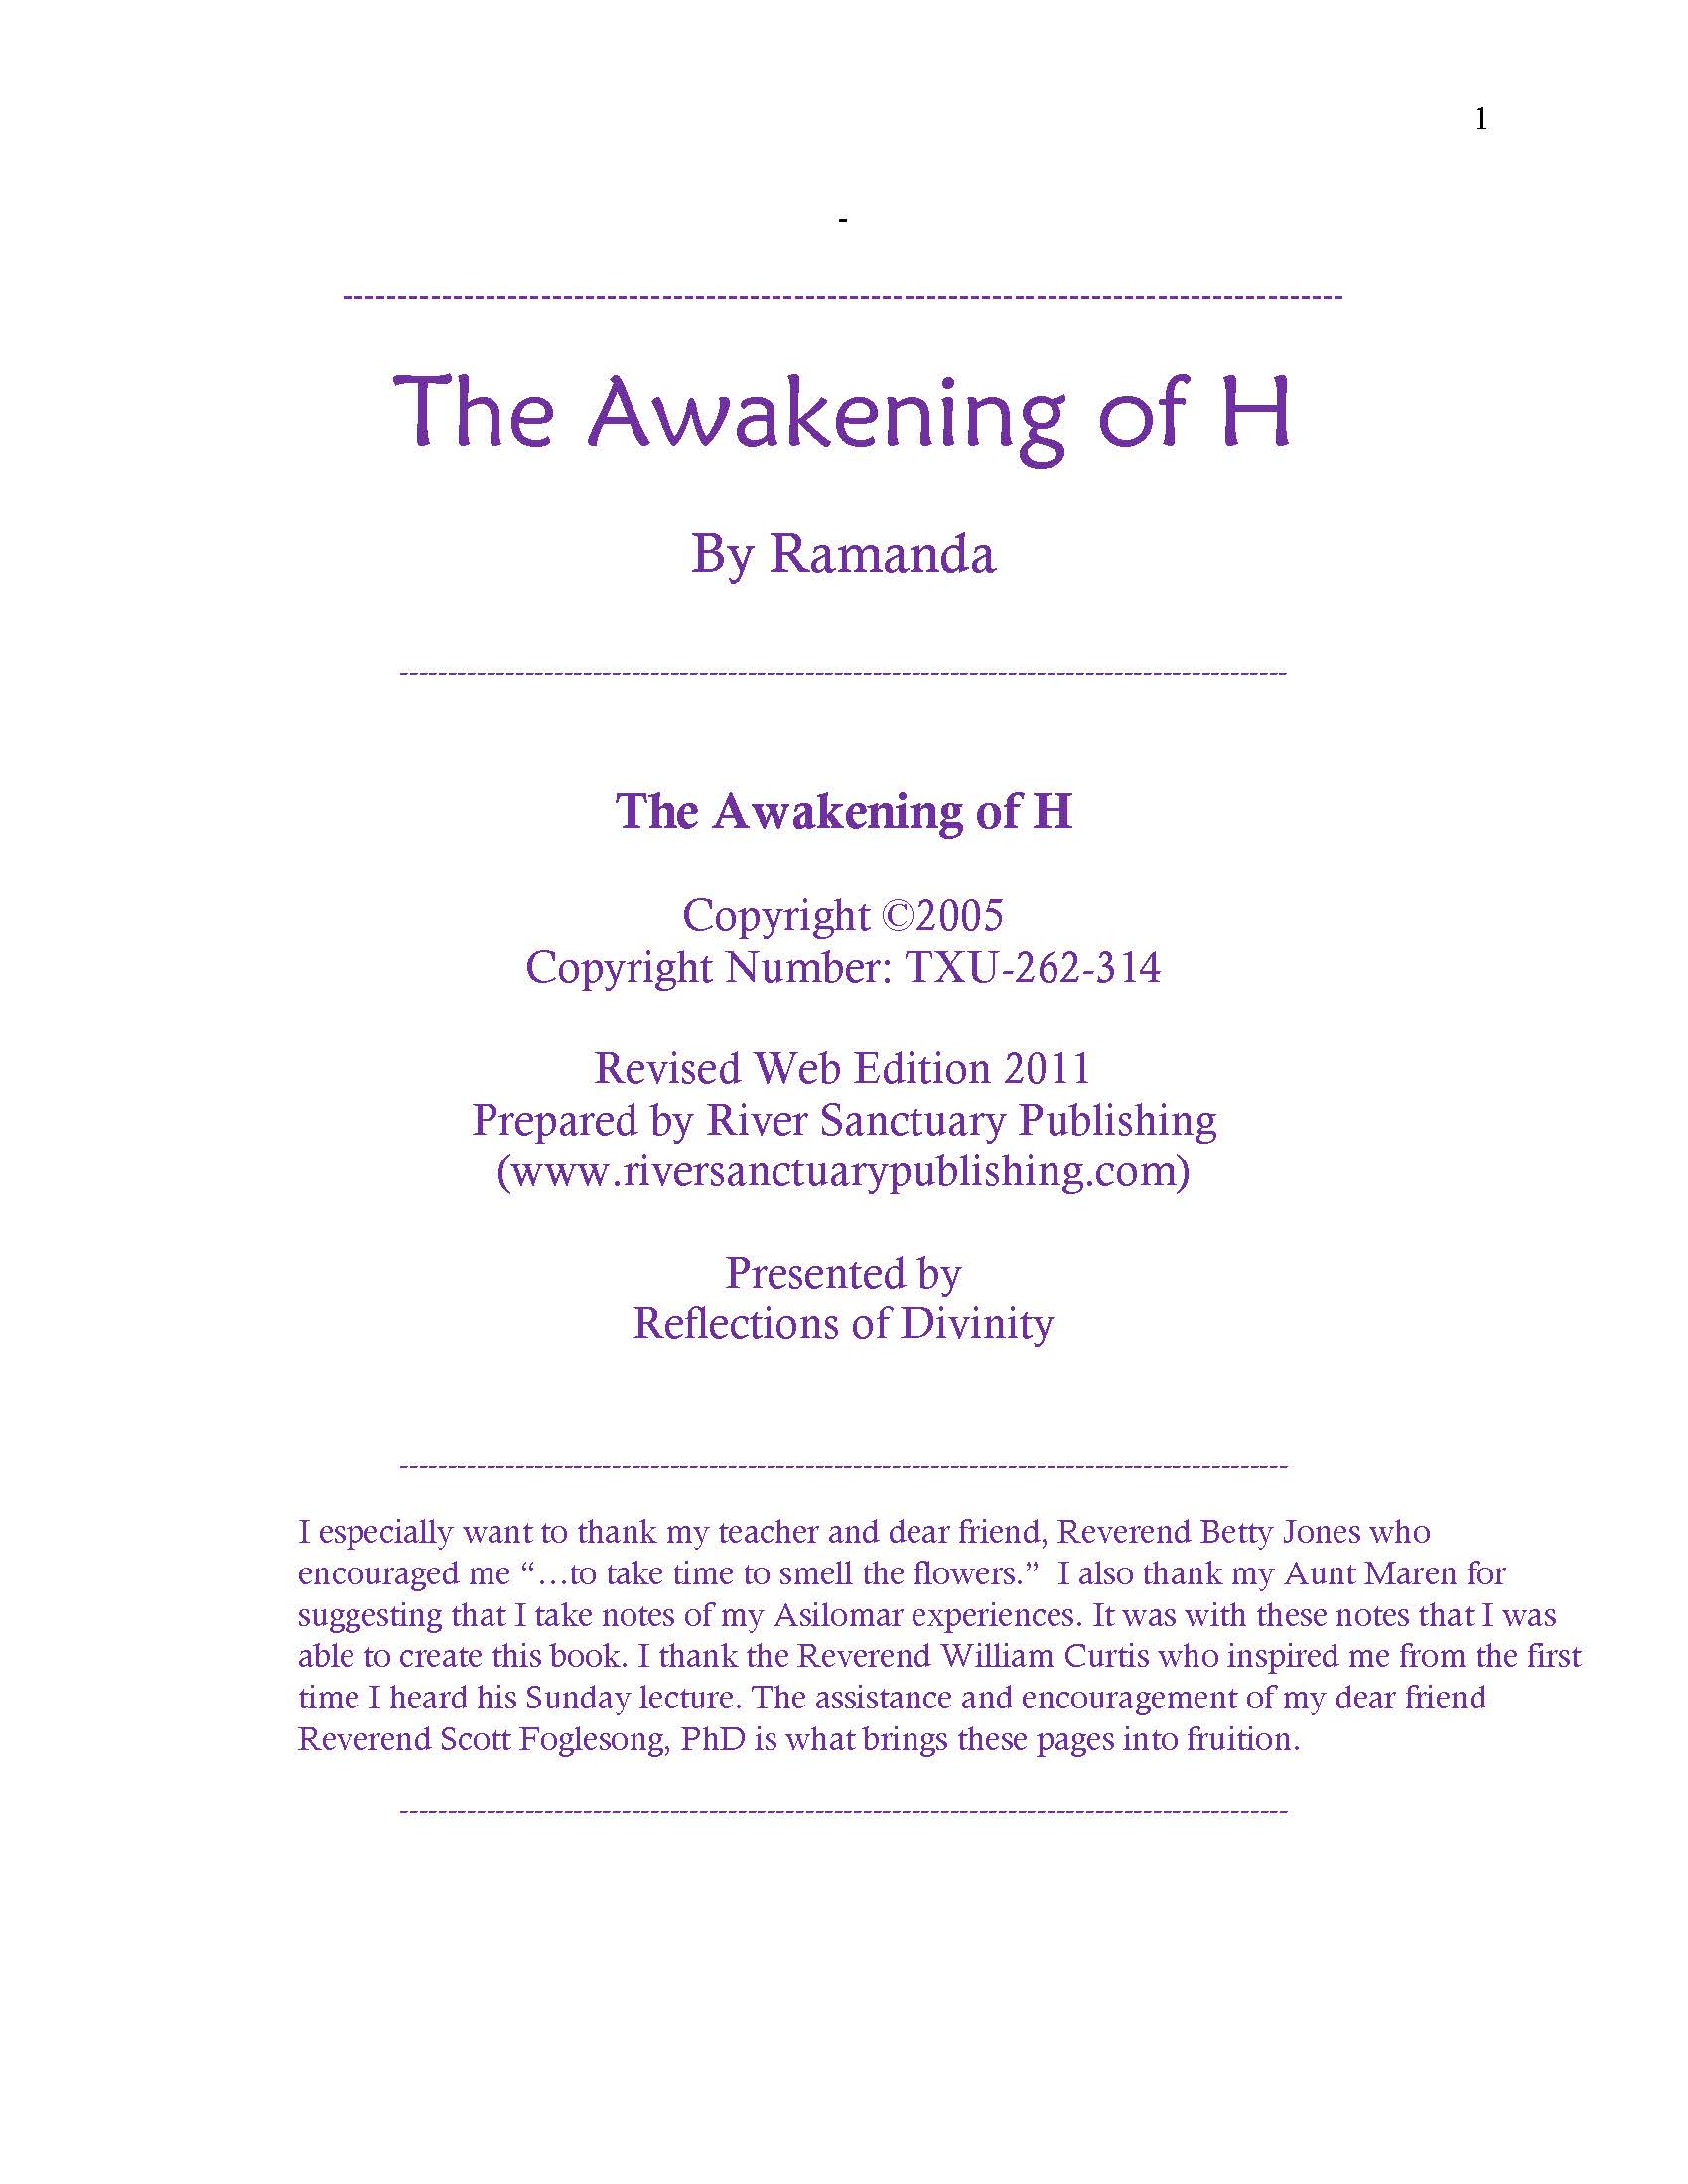 The Awakening of H by Ramanda